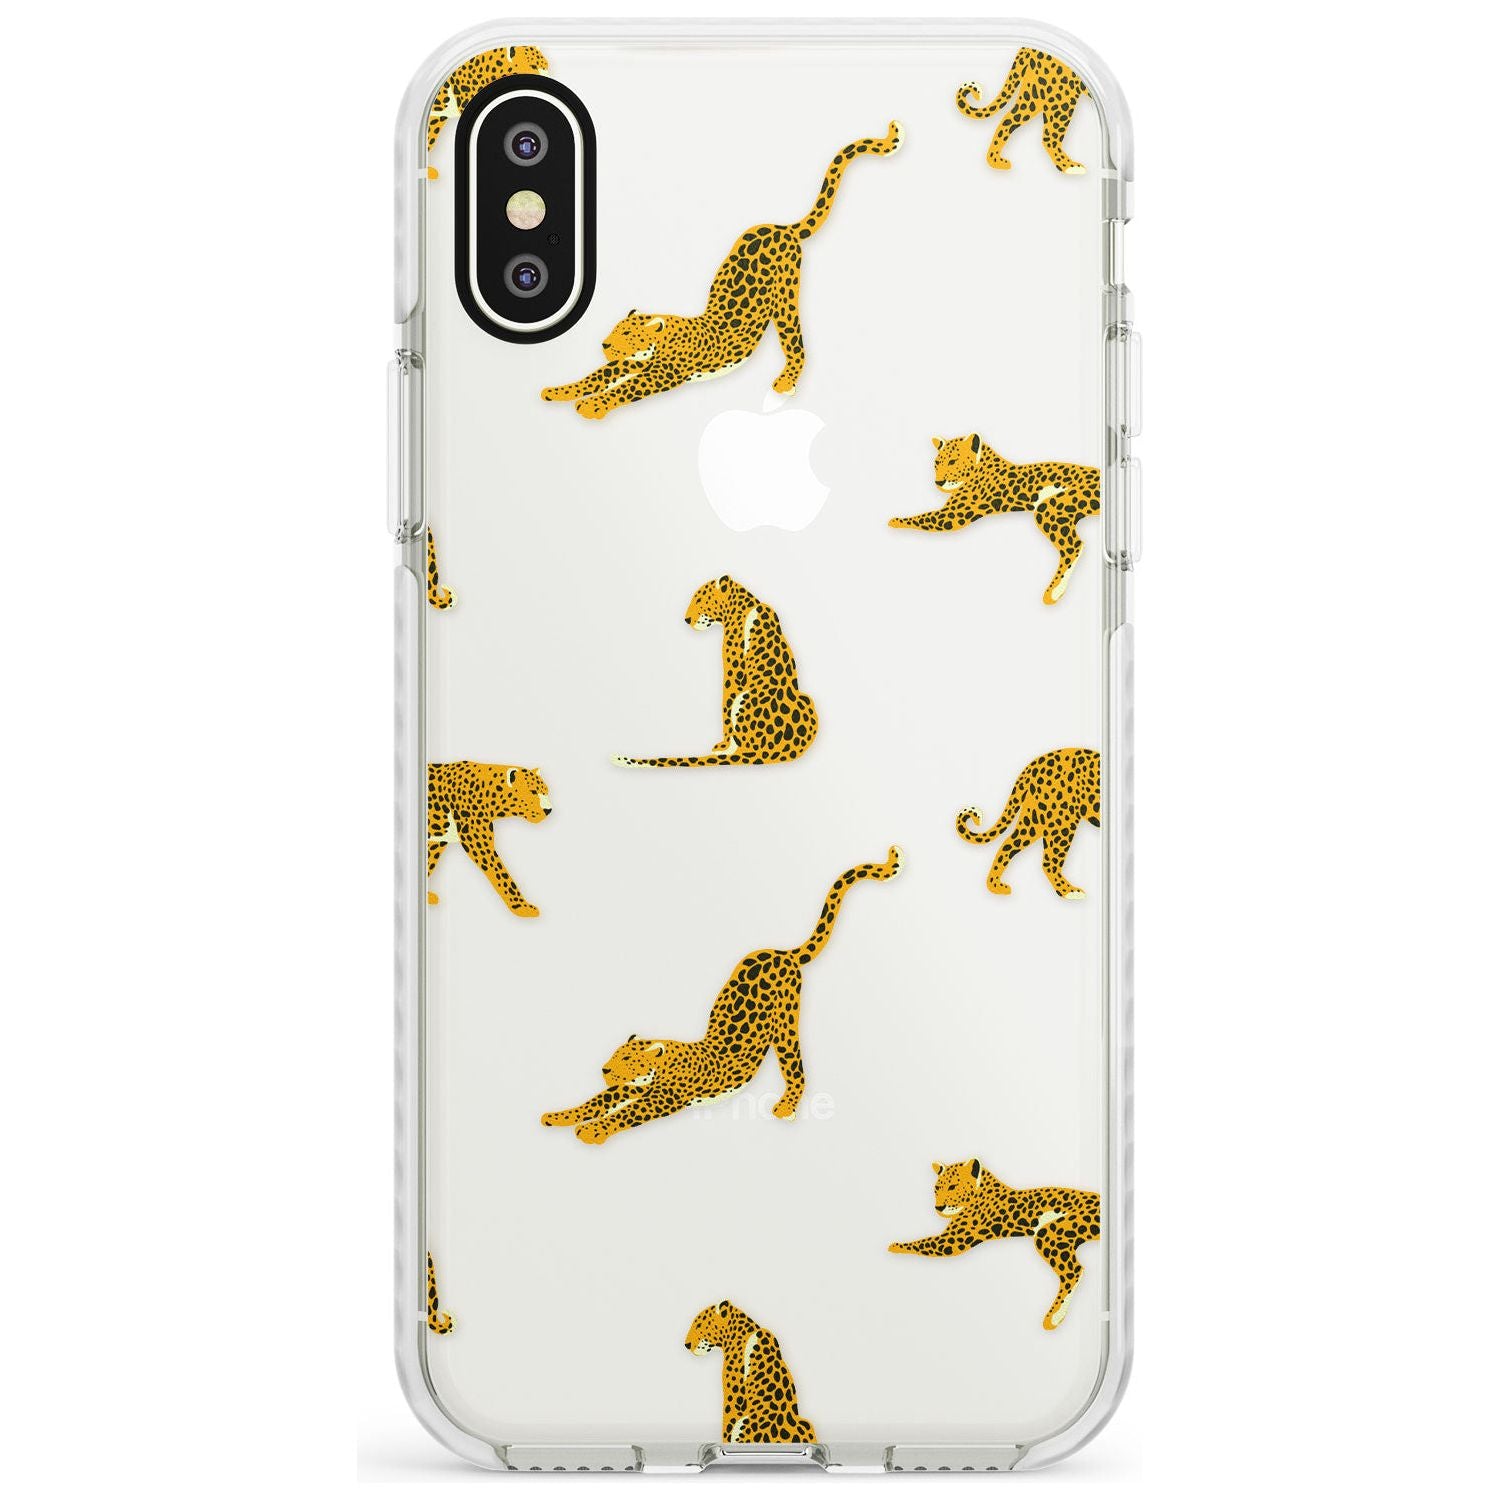 Clear Jaguar Jungle Cat Pattern Impact Phone Case for iPhone X XS Max XR